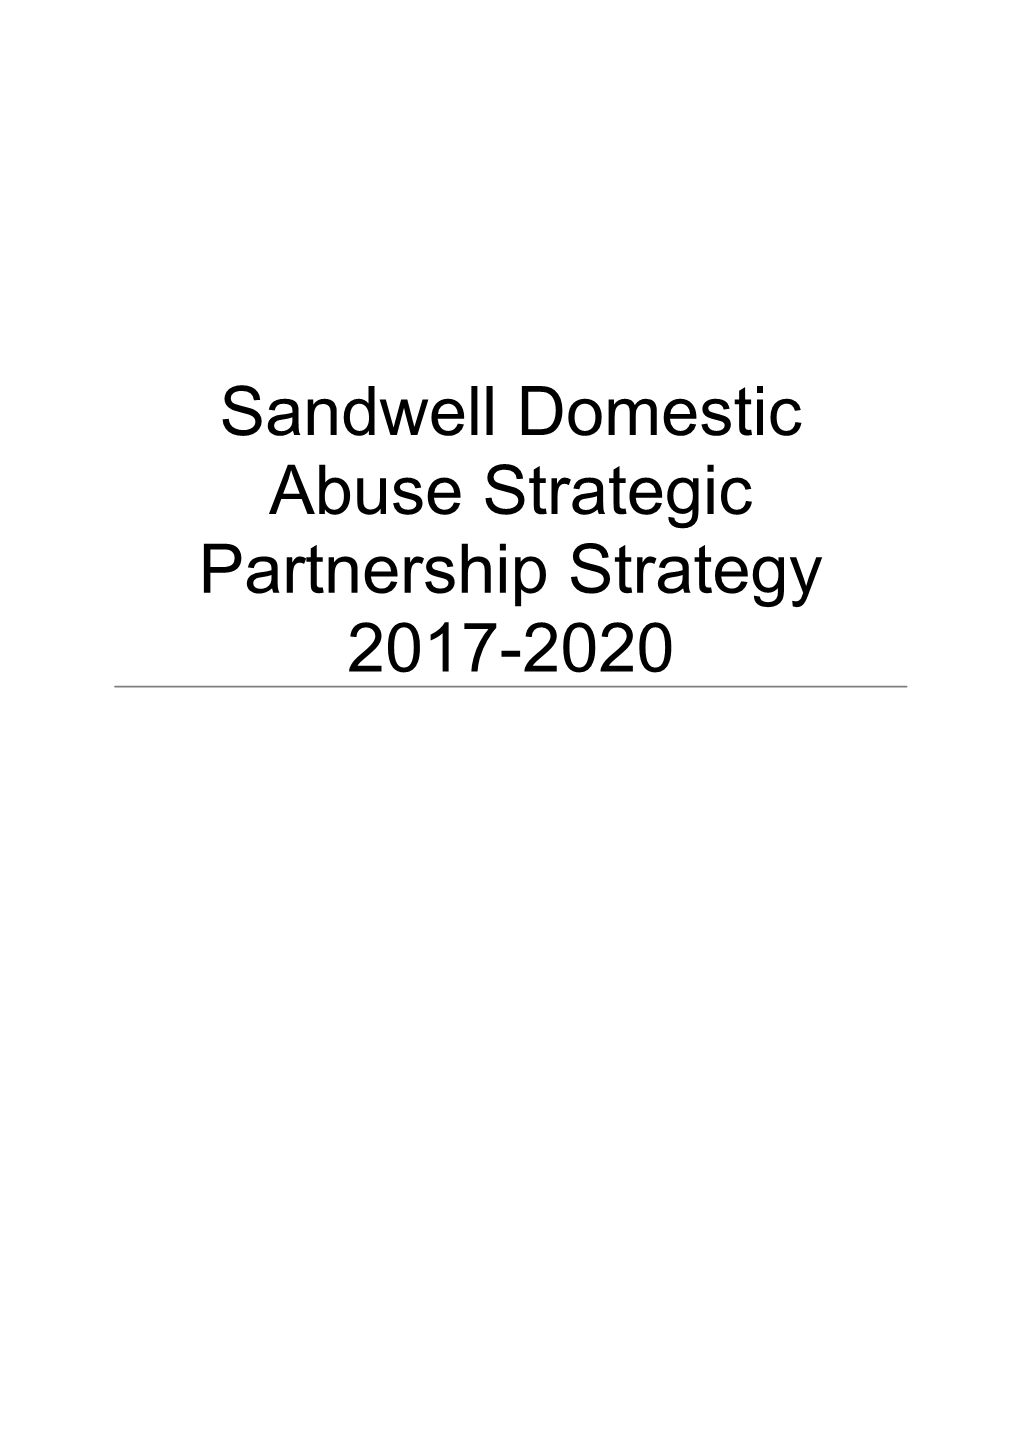 Sandwell Domestic Abuse Strategic Partnership Strategy